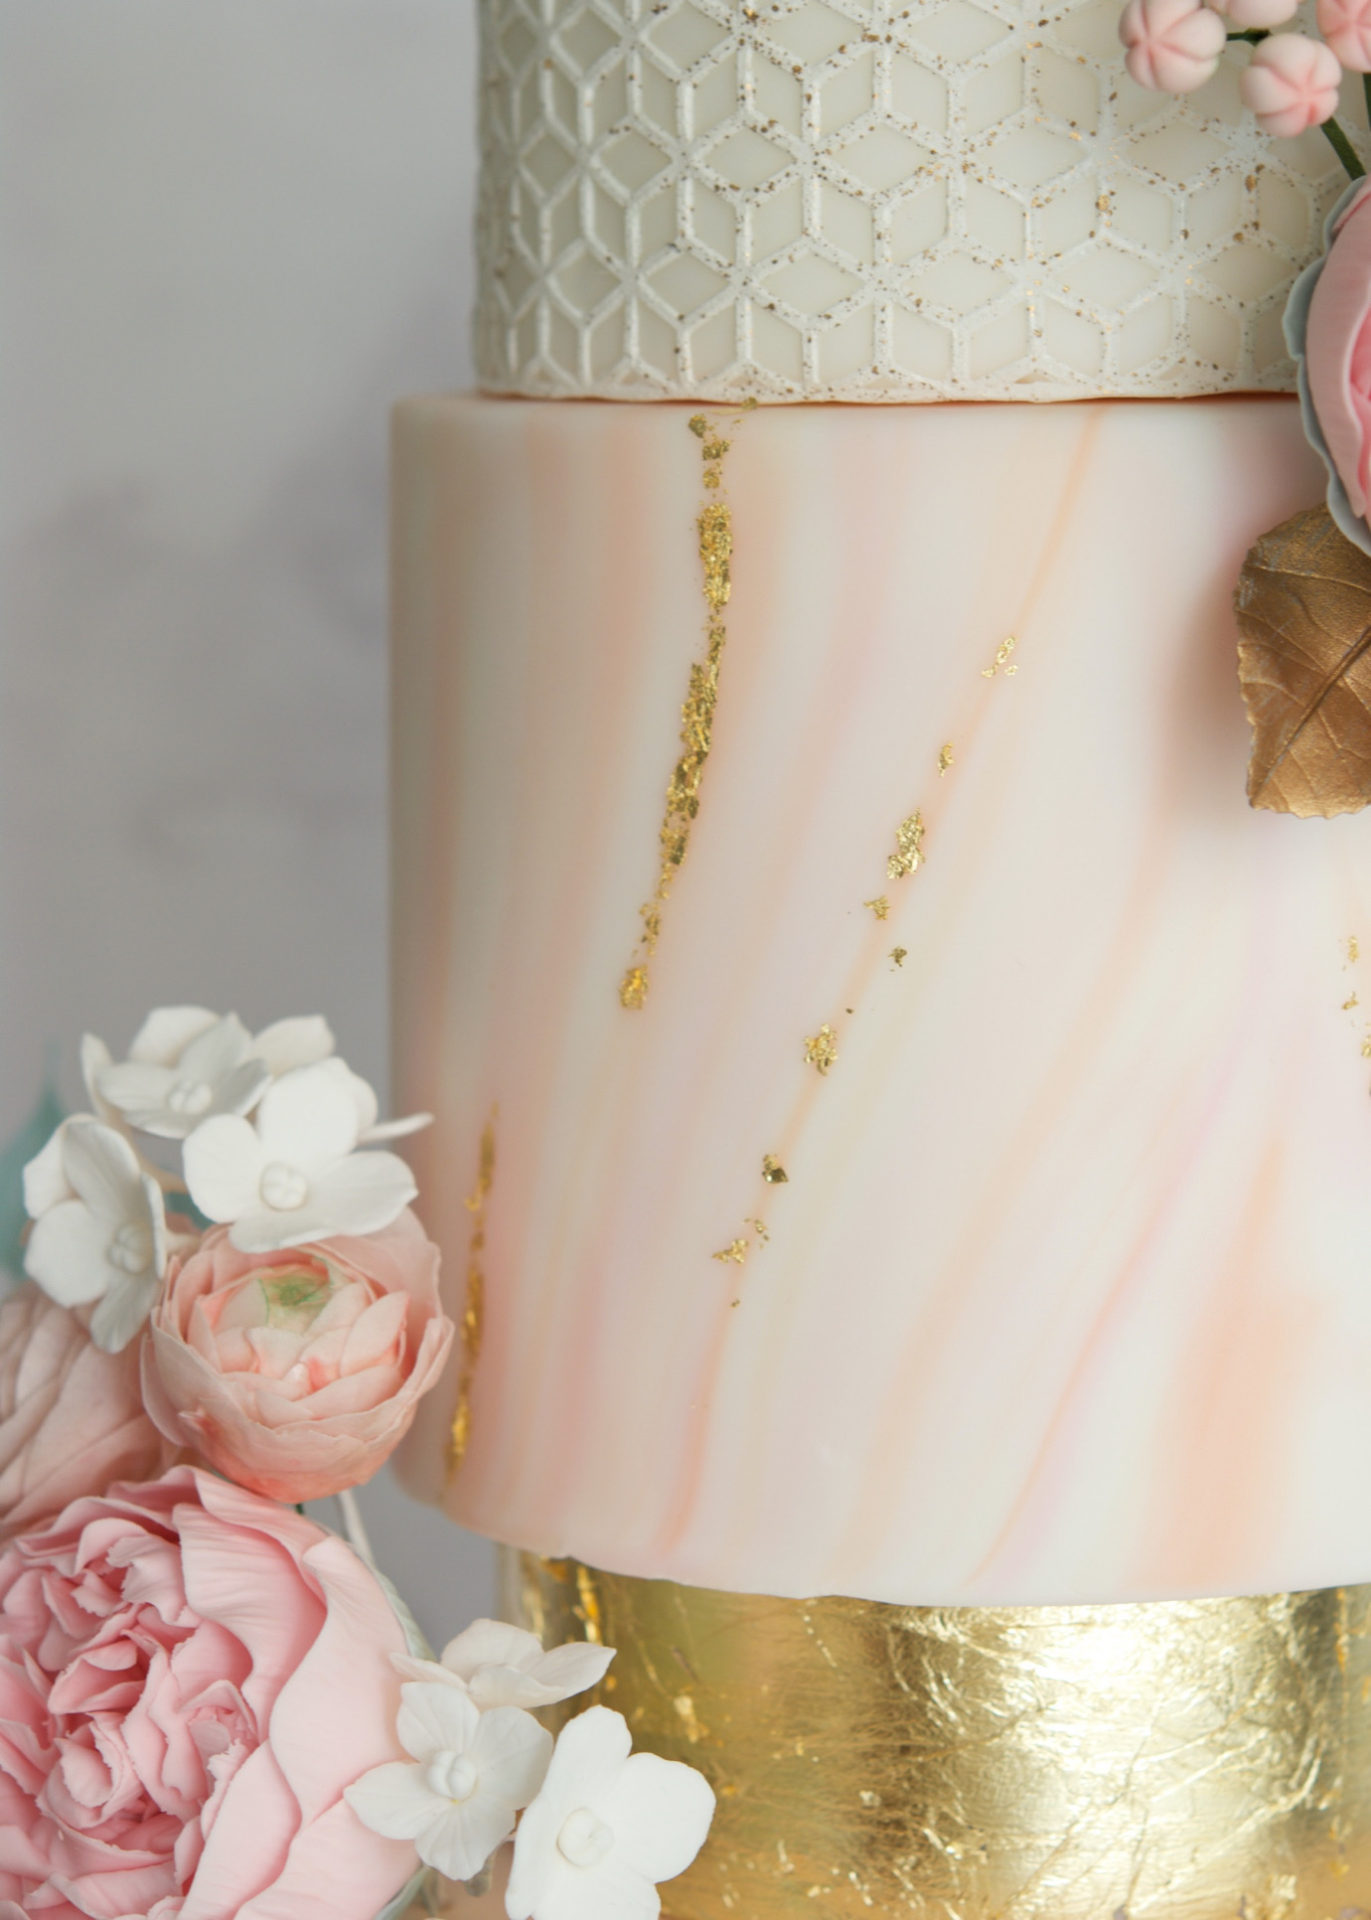 Master Class Tartas de Boda, Marble and gold cake, fondant cake, wedding cake, tarta, flores de azucar, sugarcraft, sugarflowers, glasa elastica, pan de oro, pastry, 4